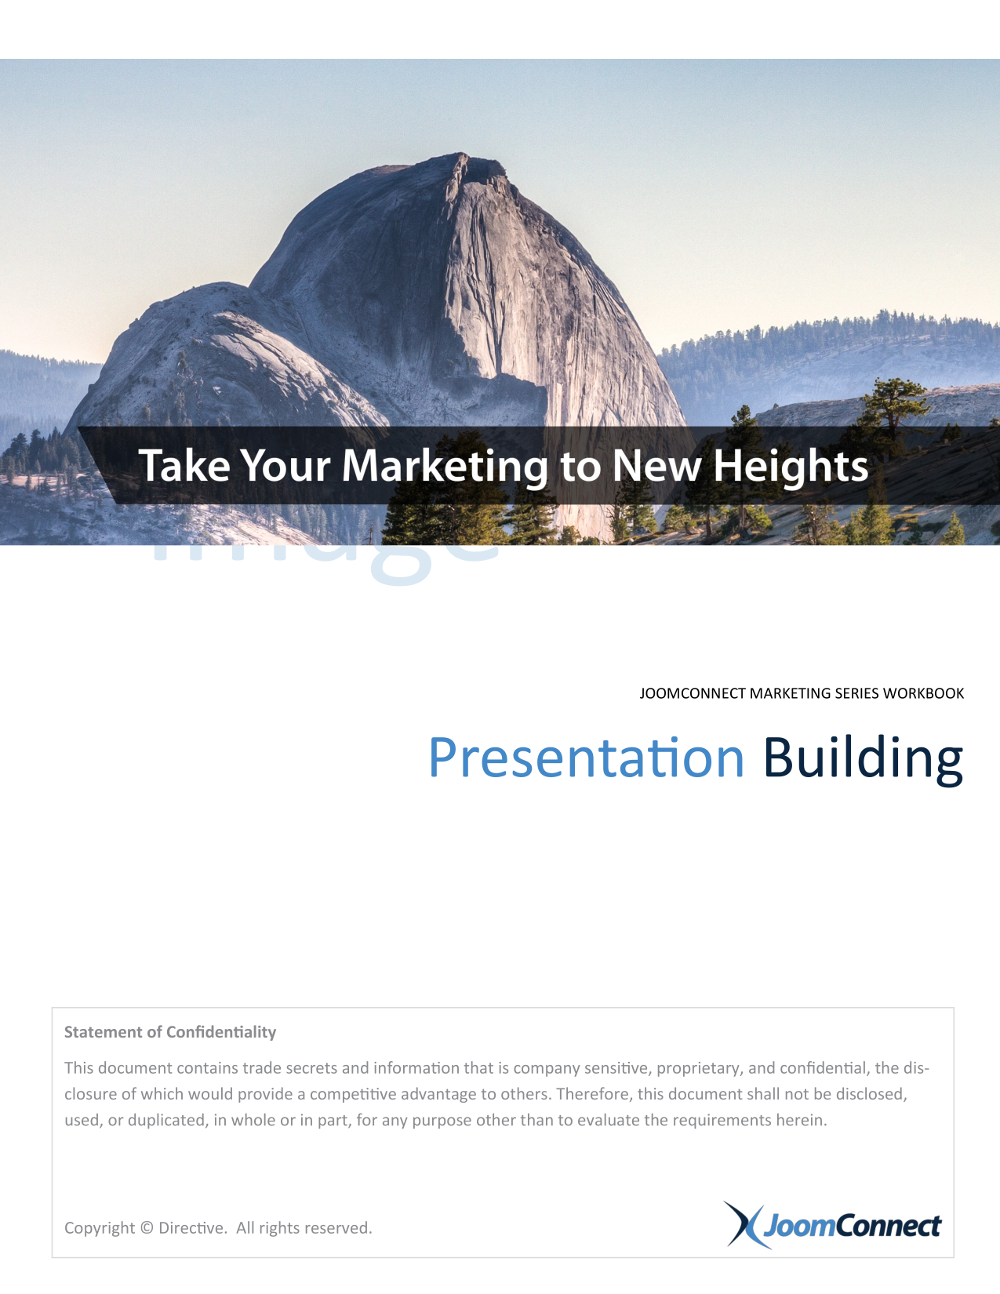 Build a Presentation